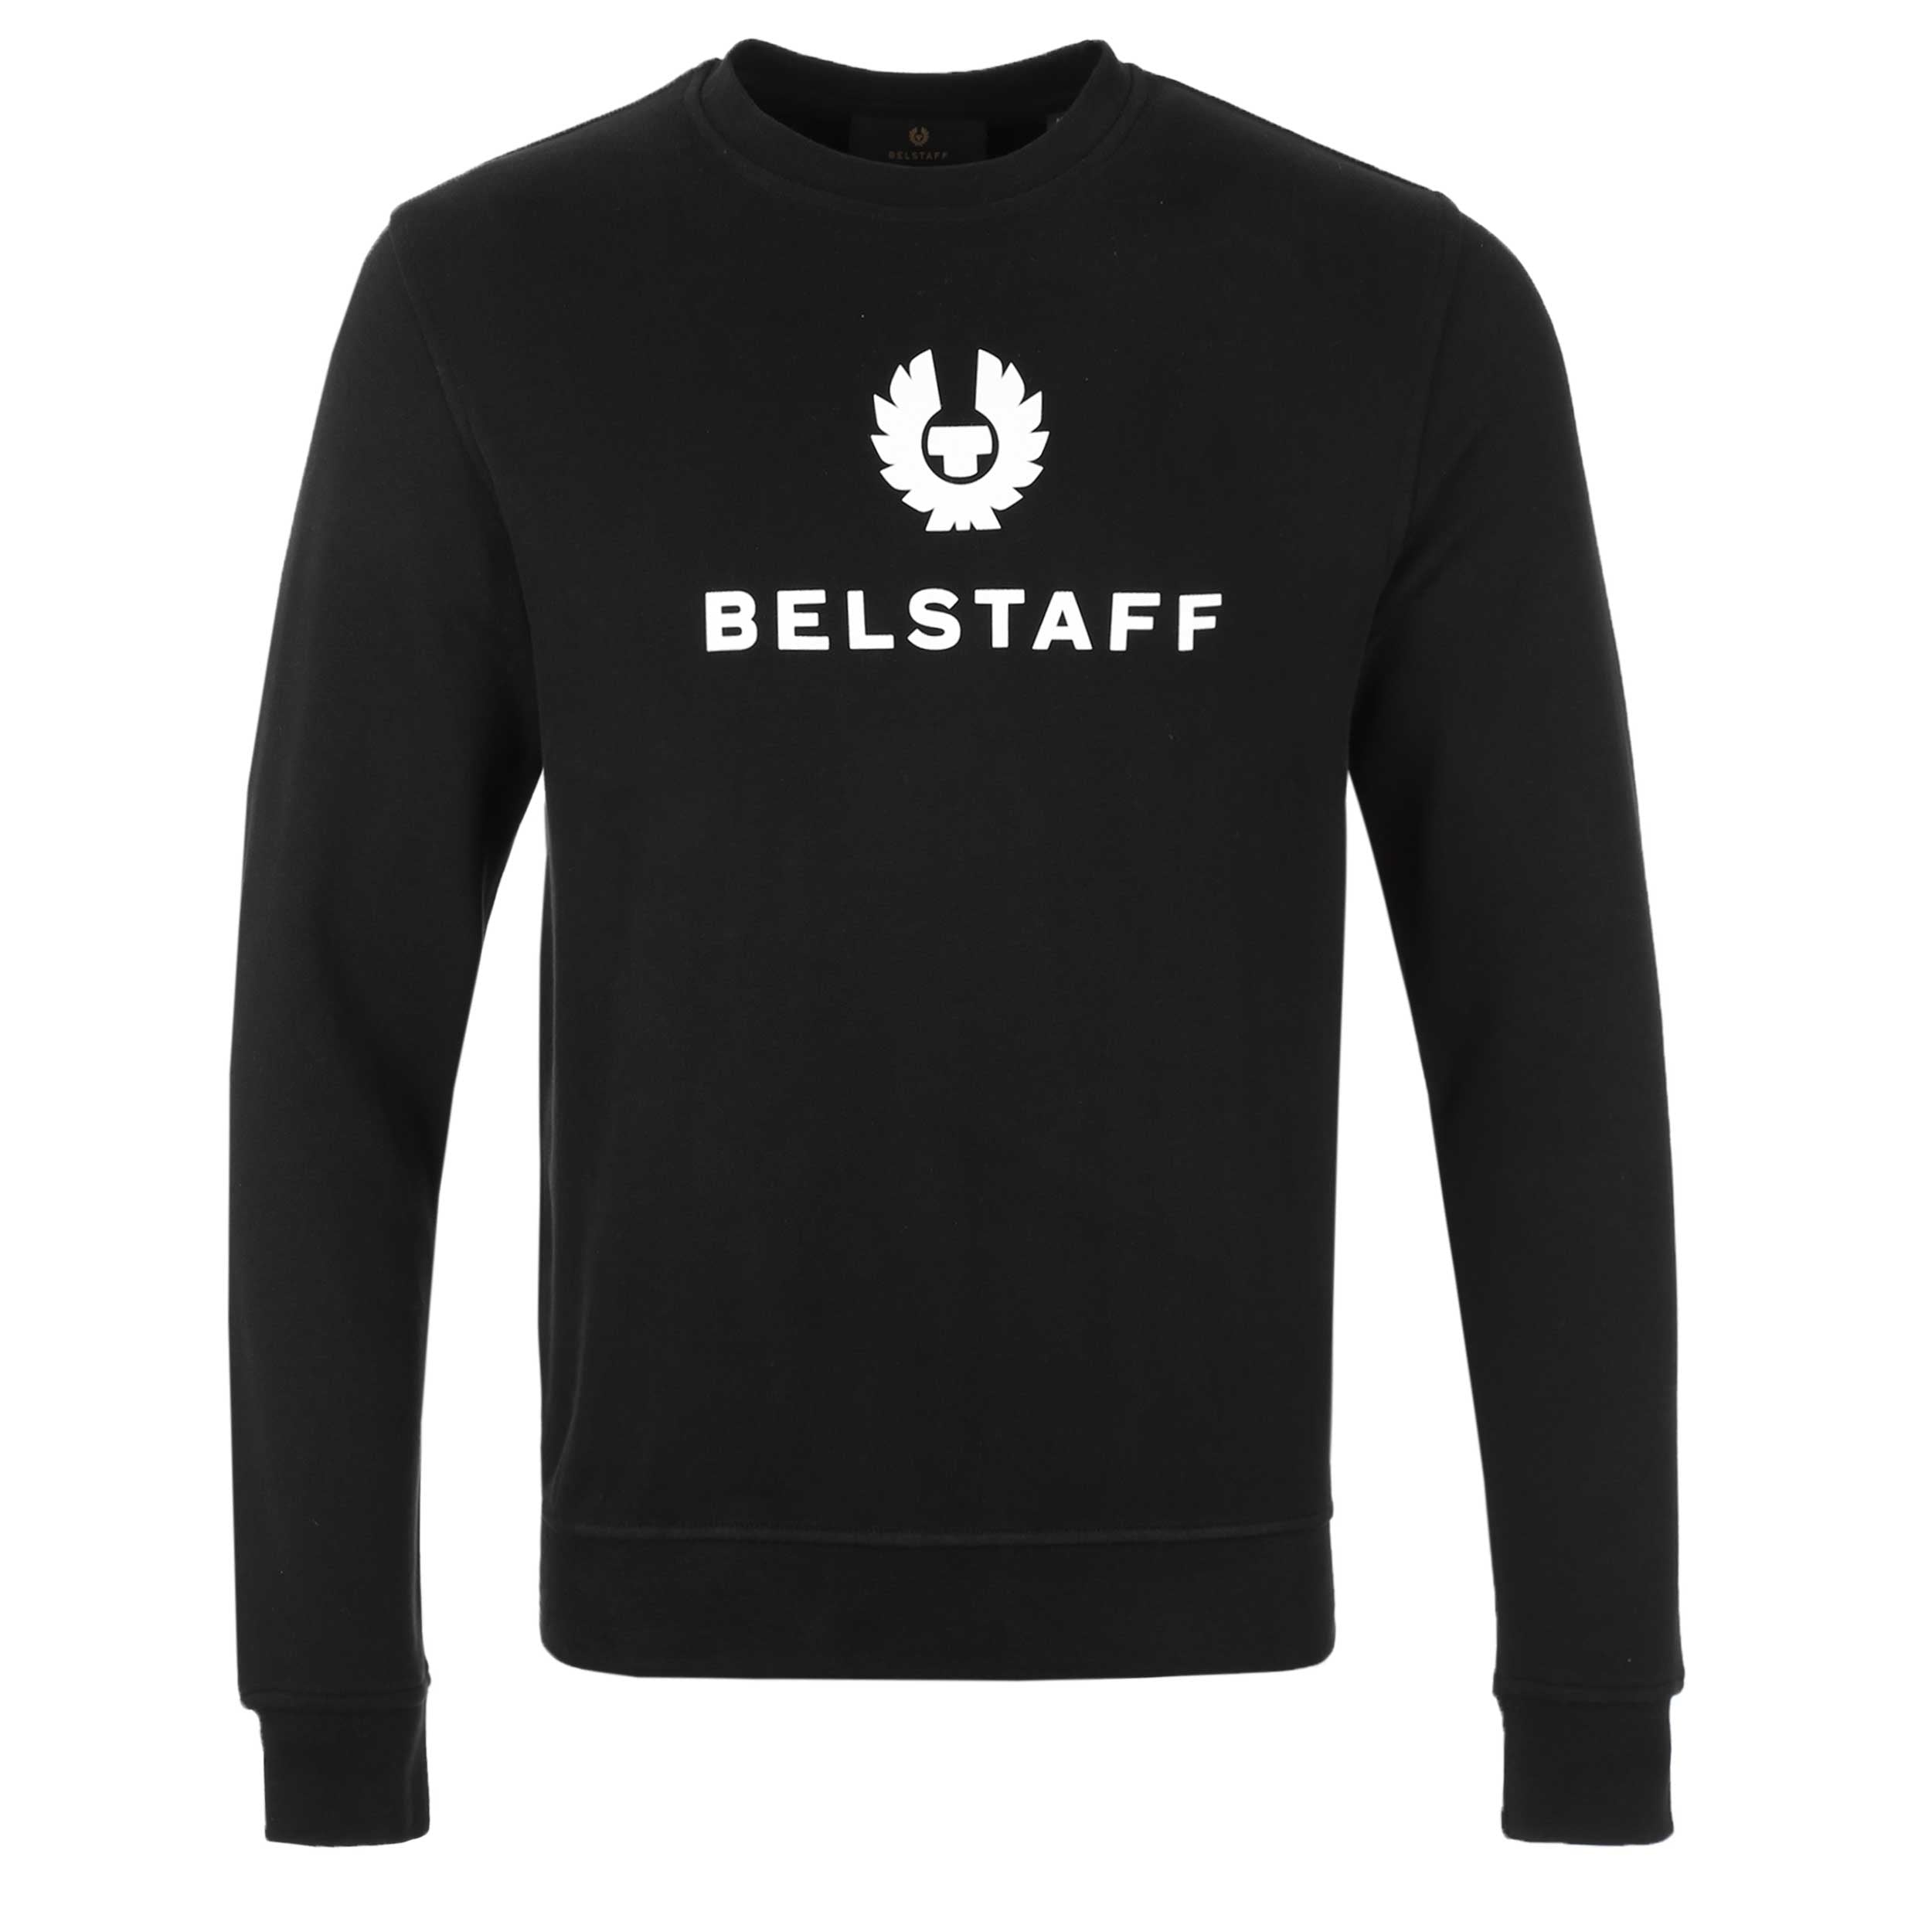 Belstaff Signature Crewneck Sweat Top in Black